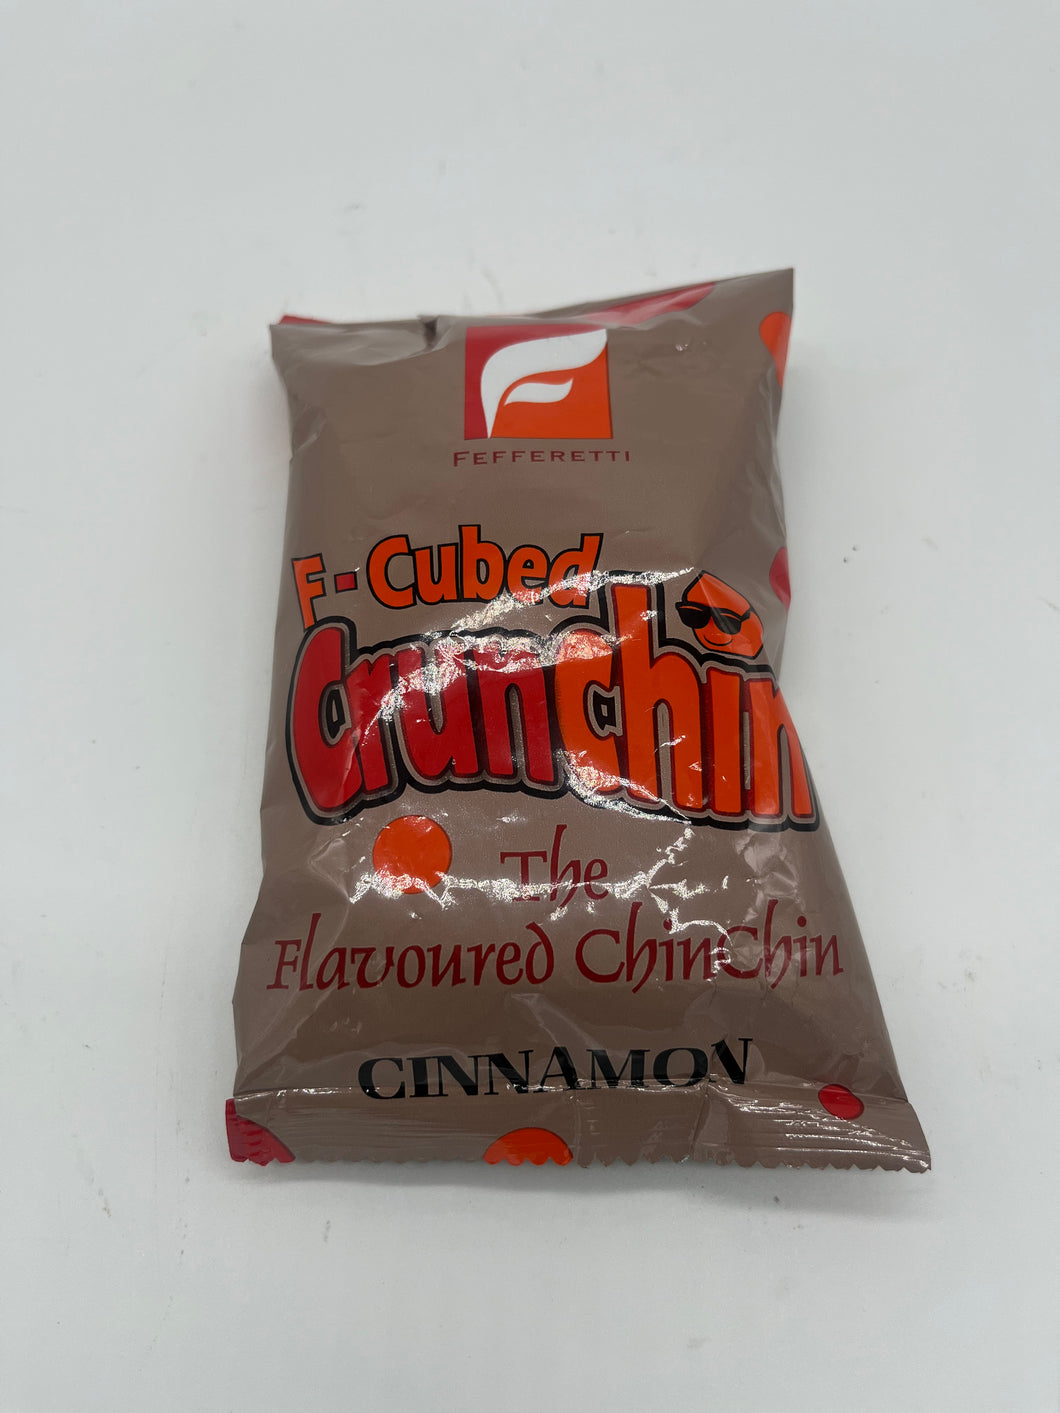 F-cubed Crunchin (Cinnamon Flavored Chin Chin)